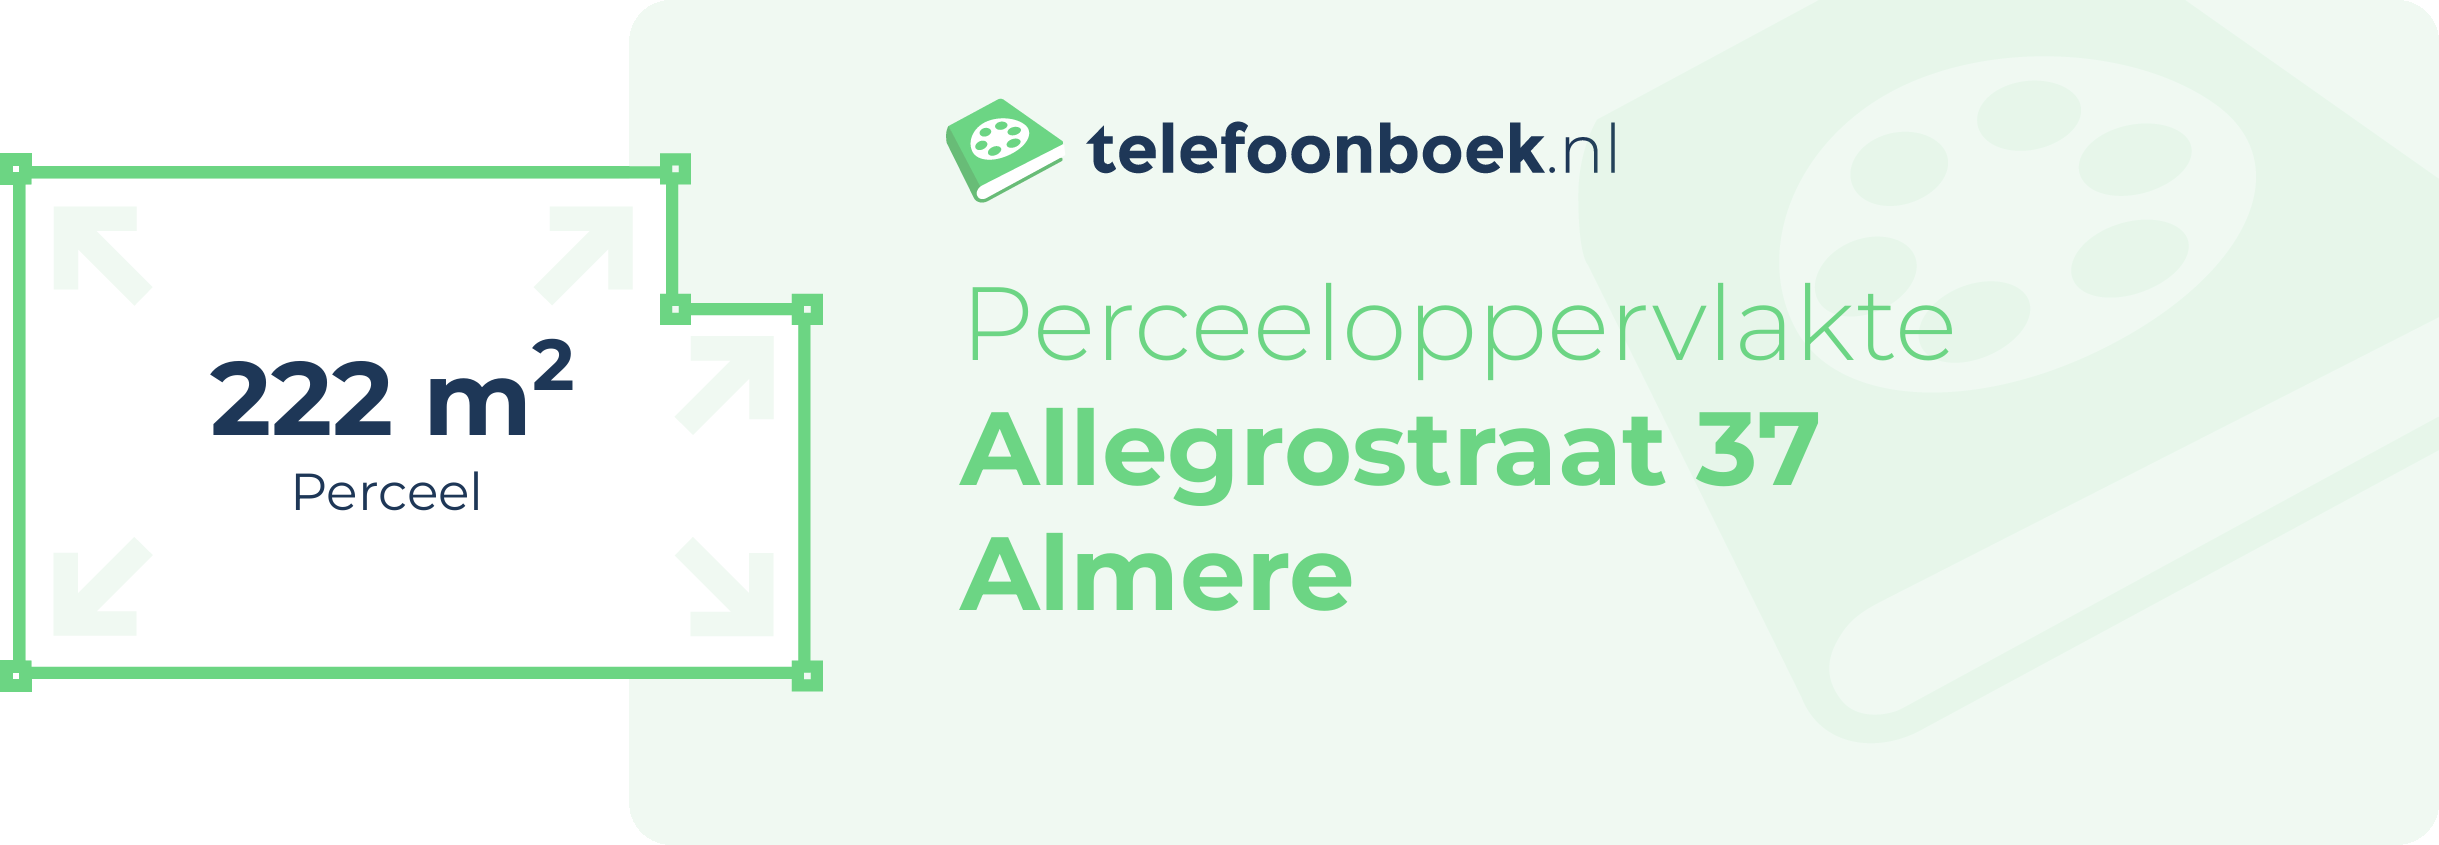 Perceeloppervlakte Allegrostraat 37 Almere